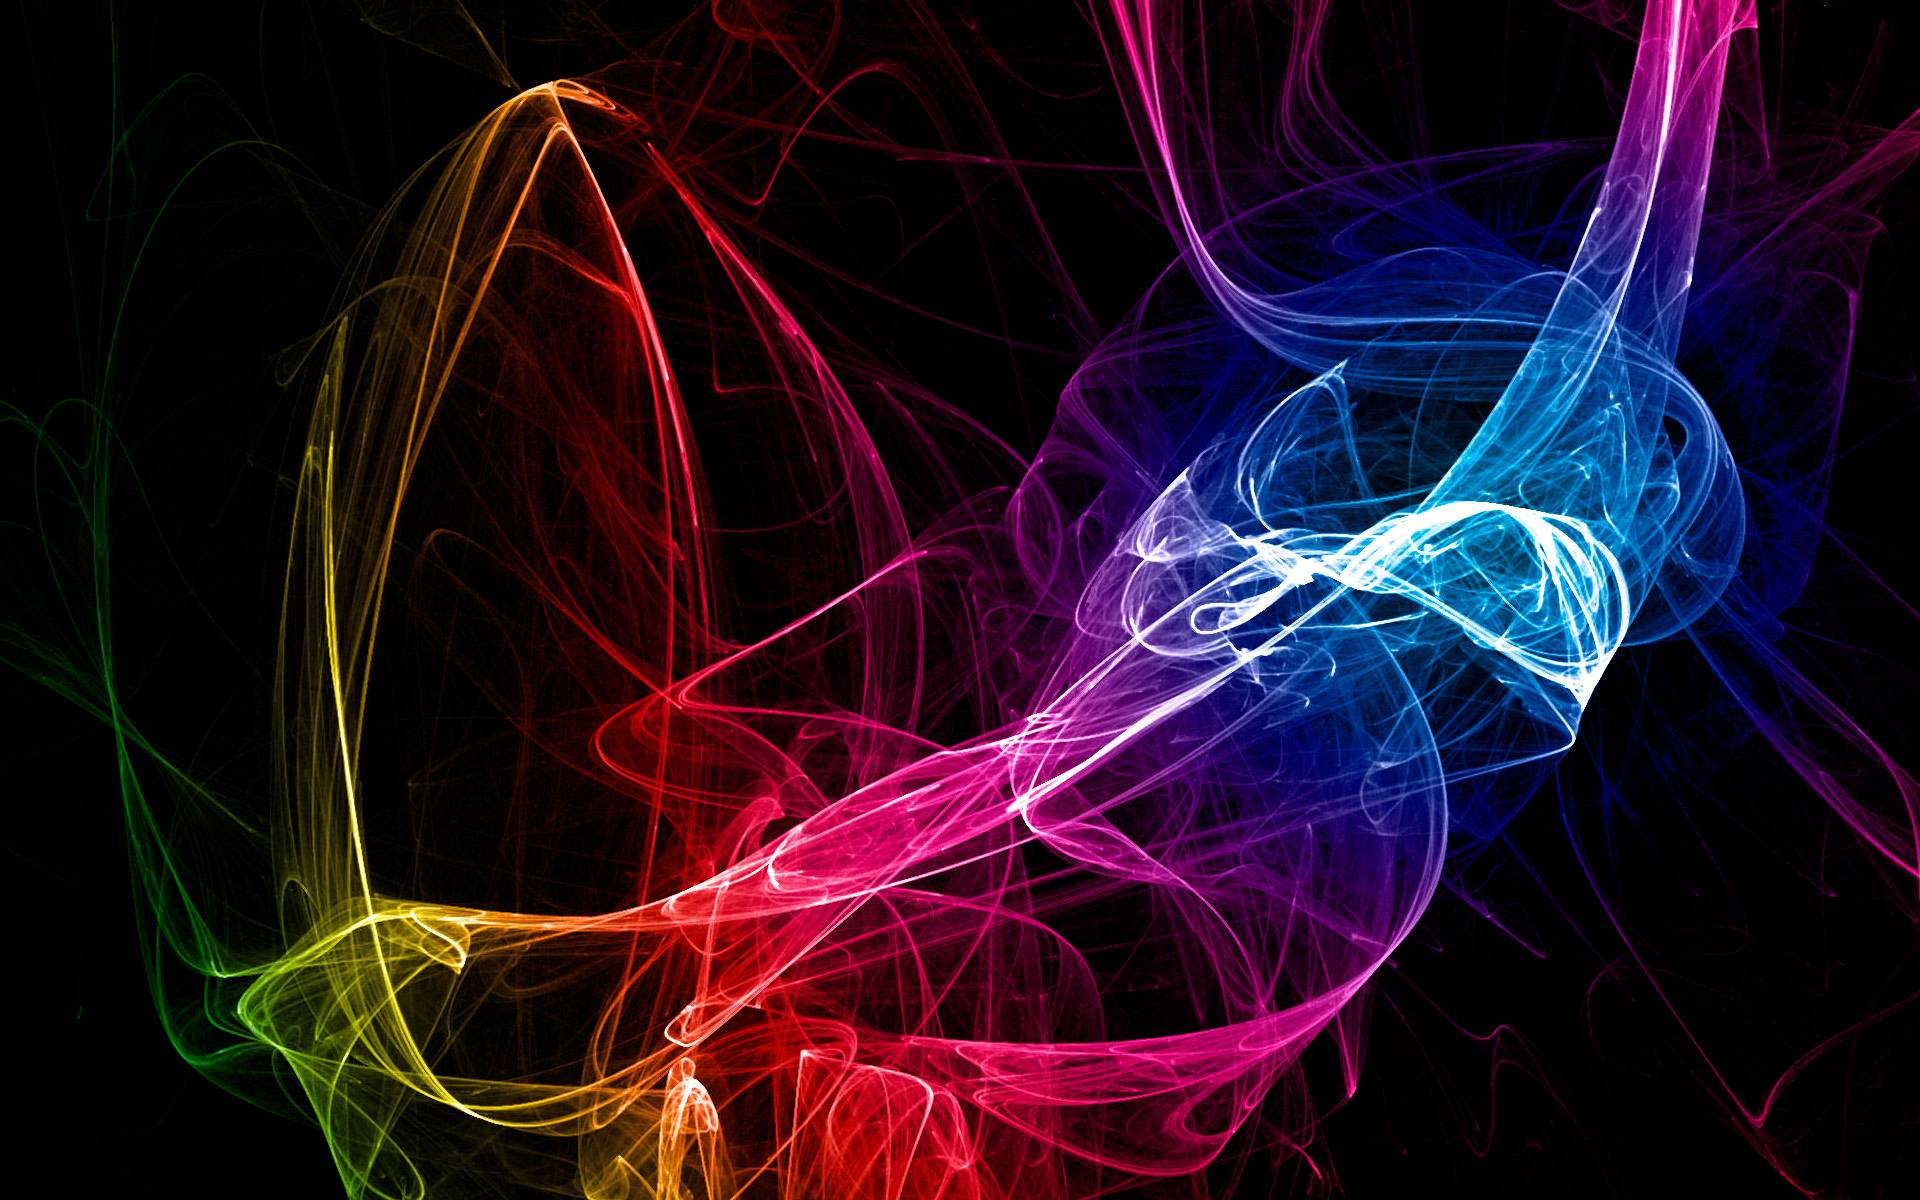 Free 43 Colorful Desktop Background